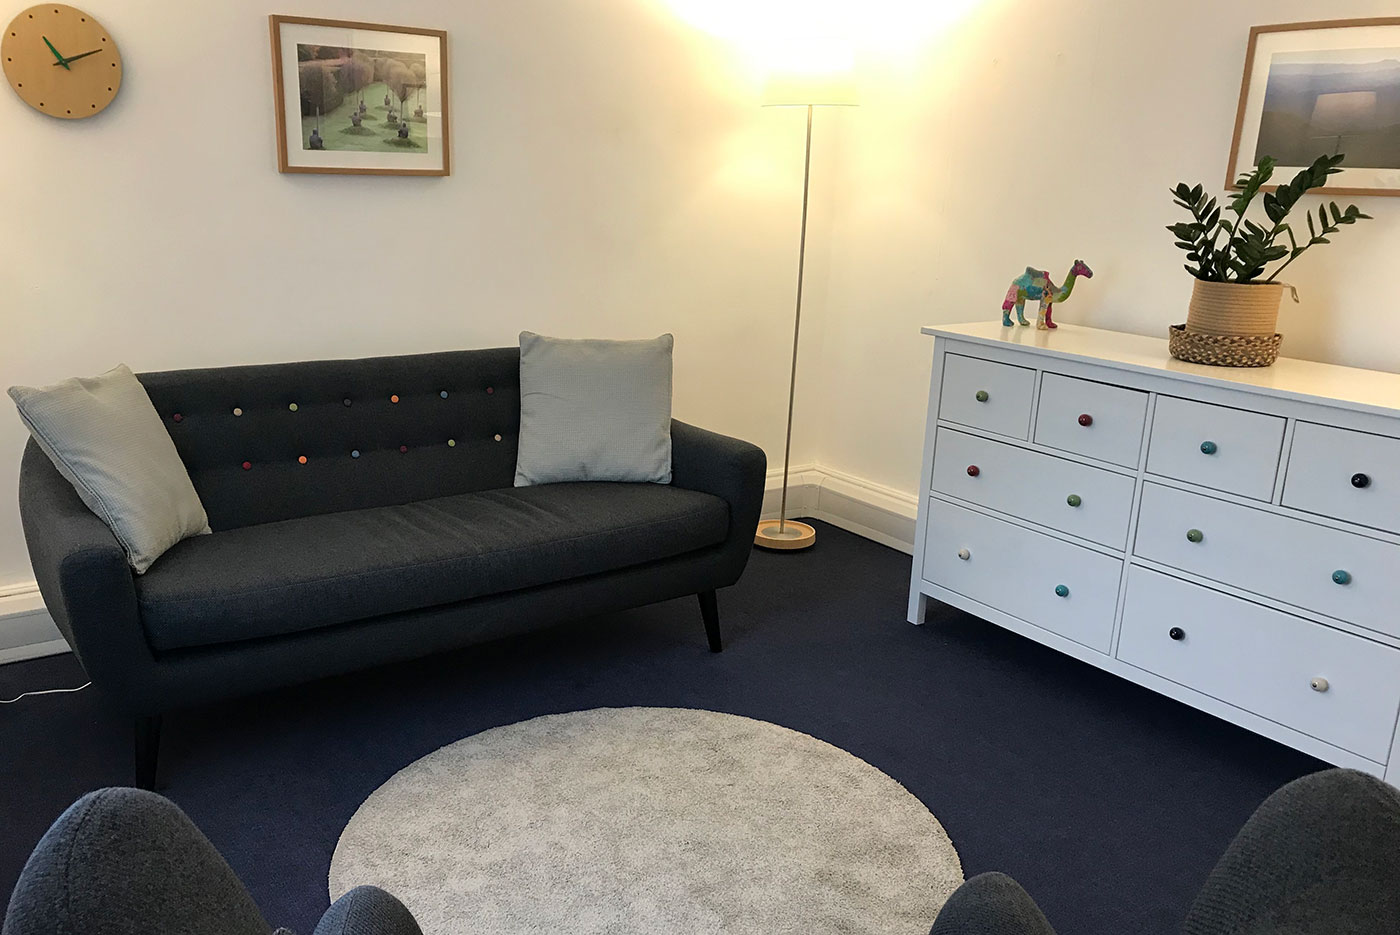 London Bridge Room 27: sofa, rug, chest of drawers, lamp, plant